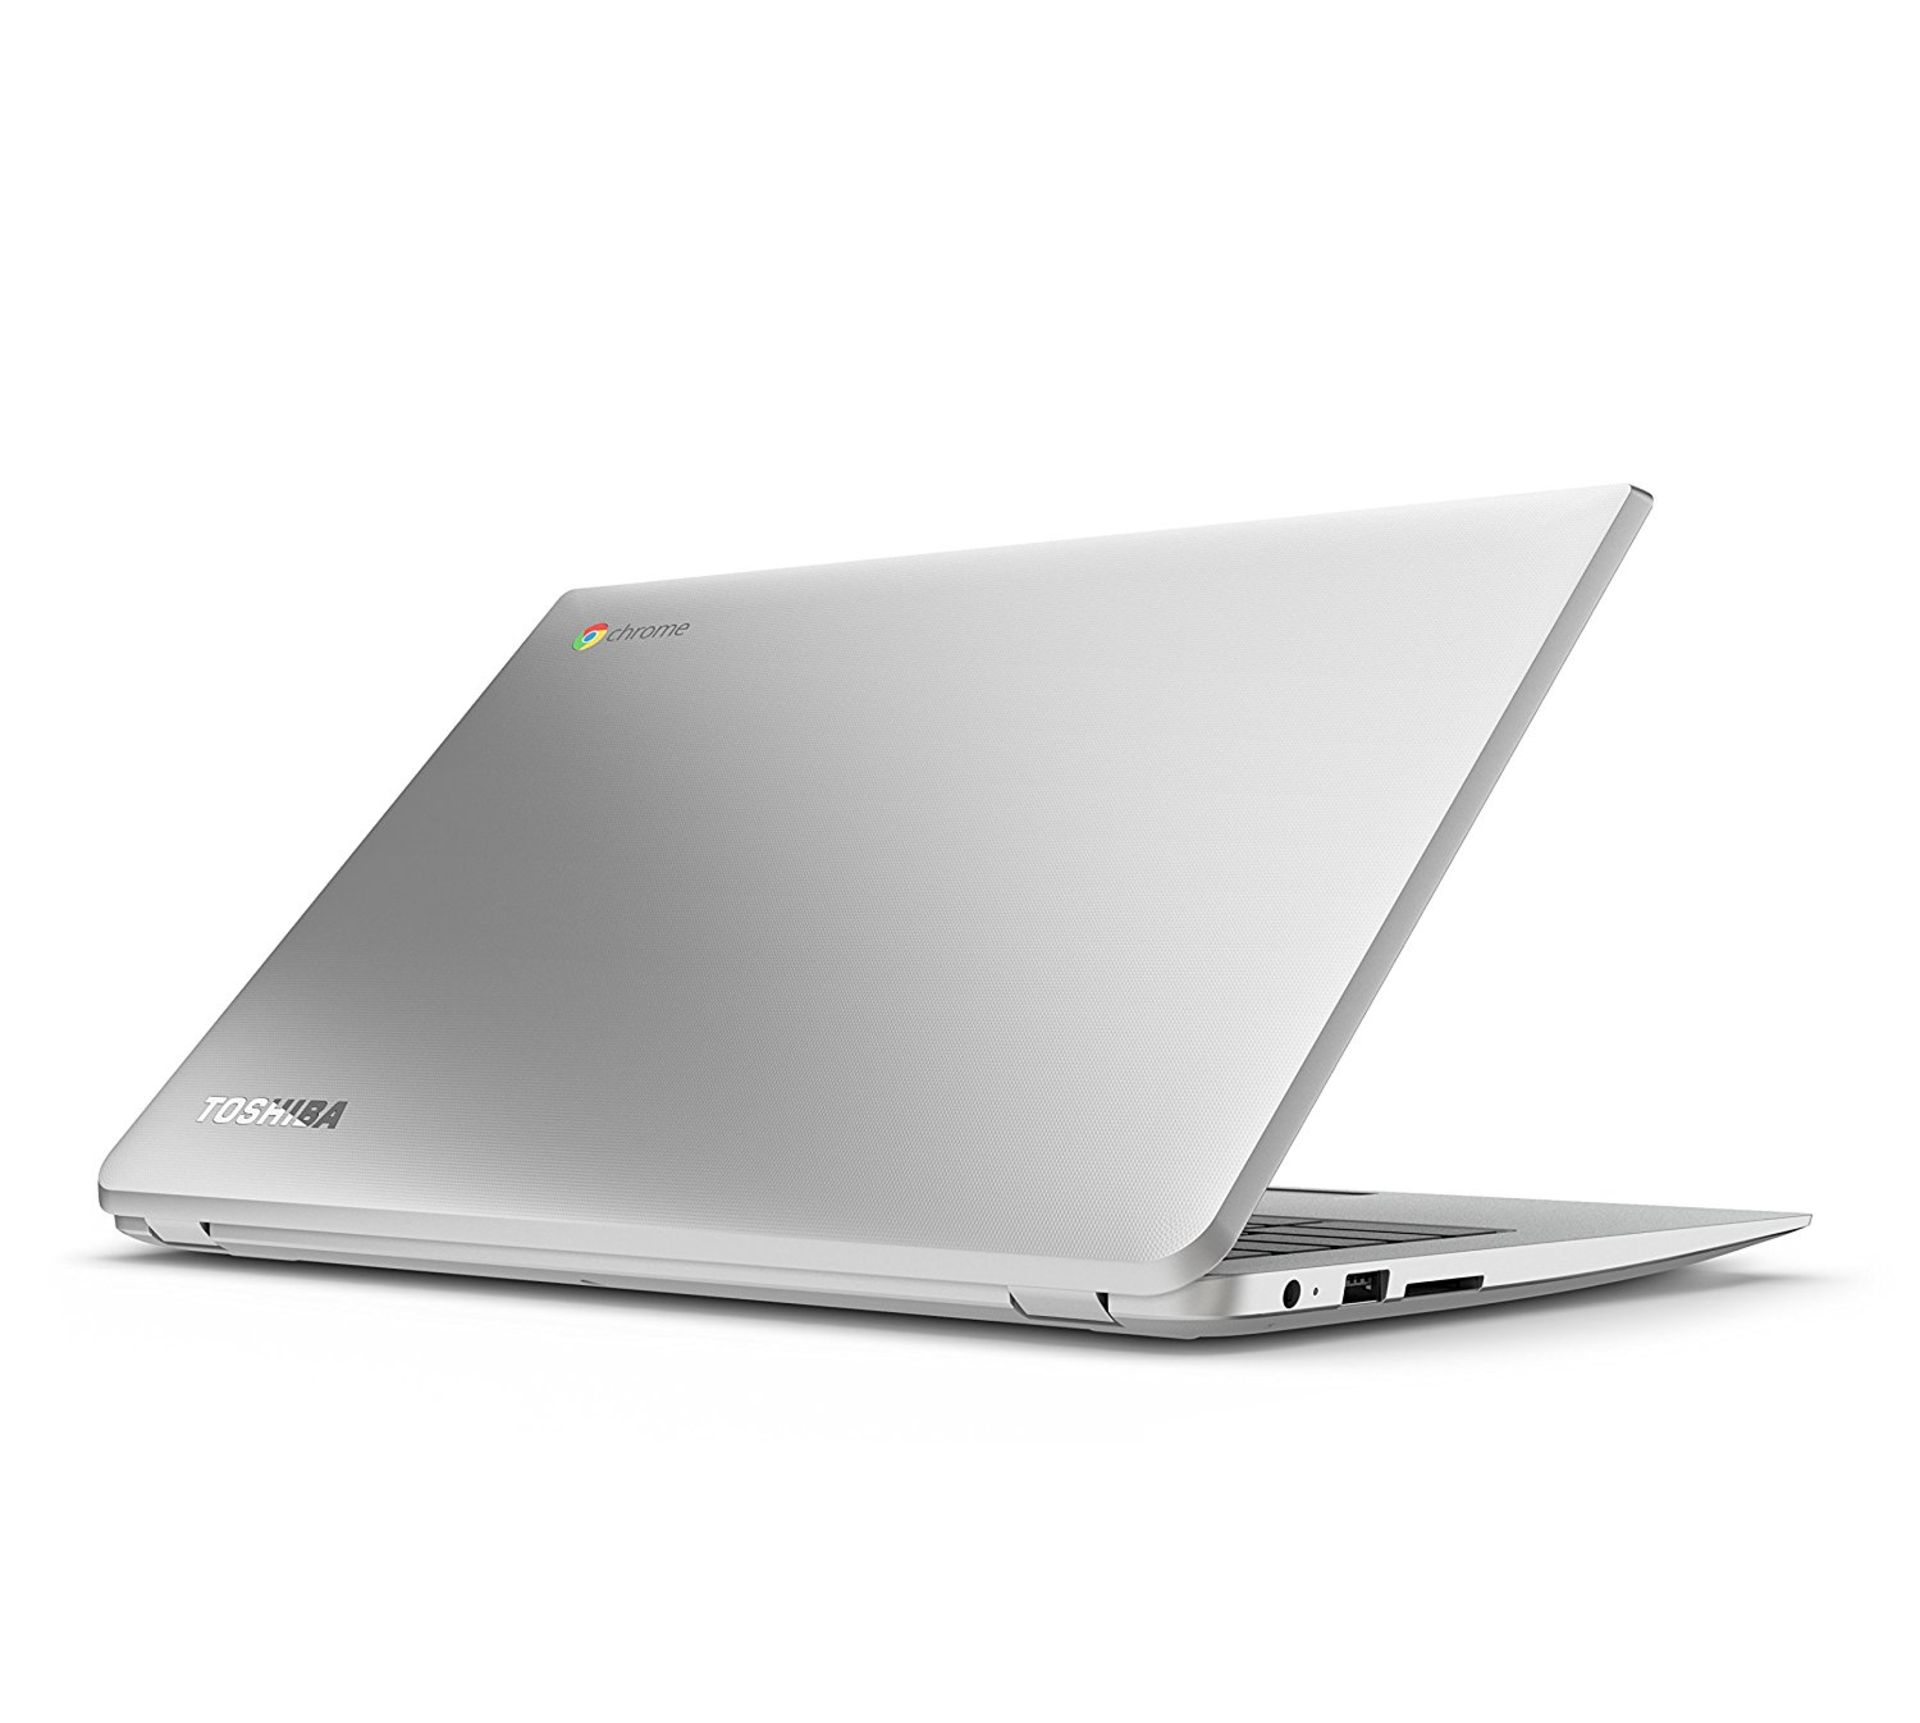 V Grade A/B Toshiba 13.3" Chromebook - 16GB SSD - Brushed Shiny Silver Finish - Google Chrome OS - - Image 2 of 2